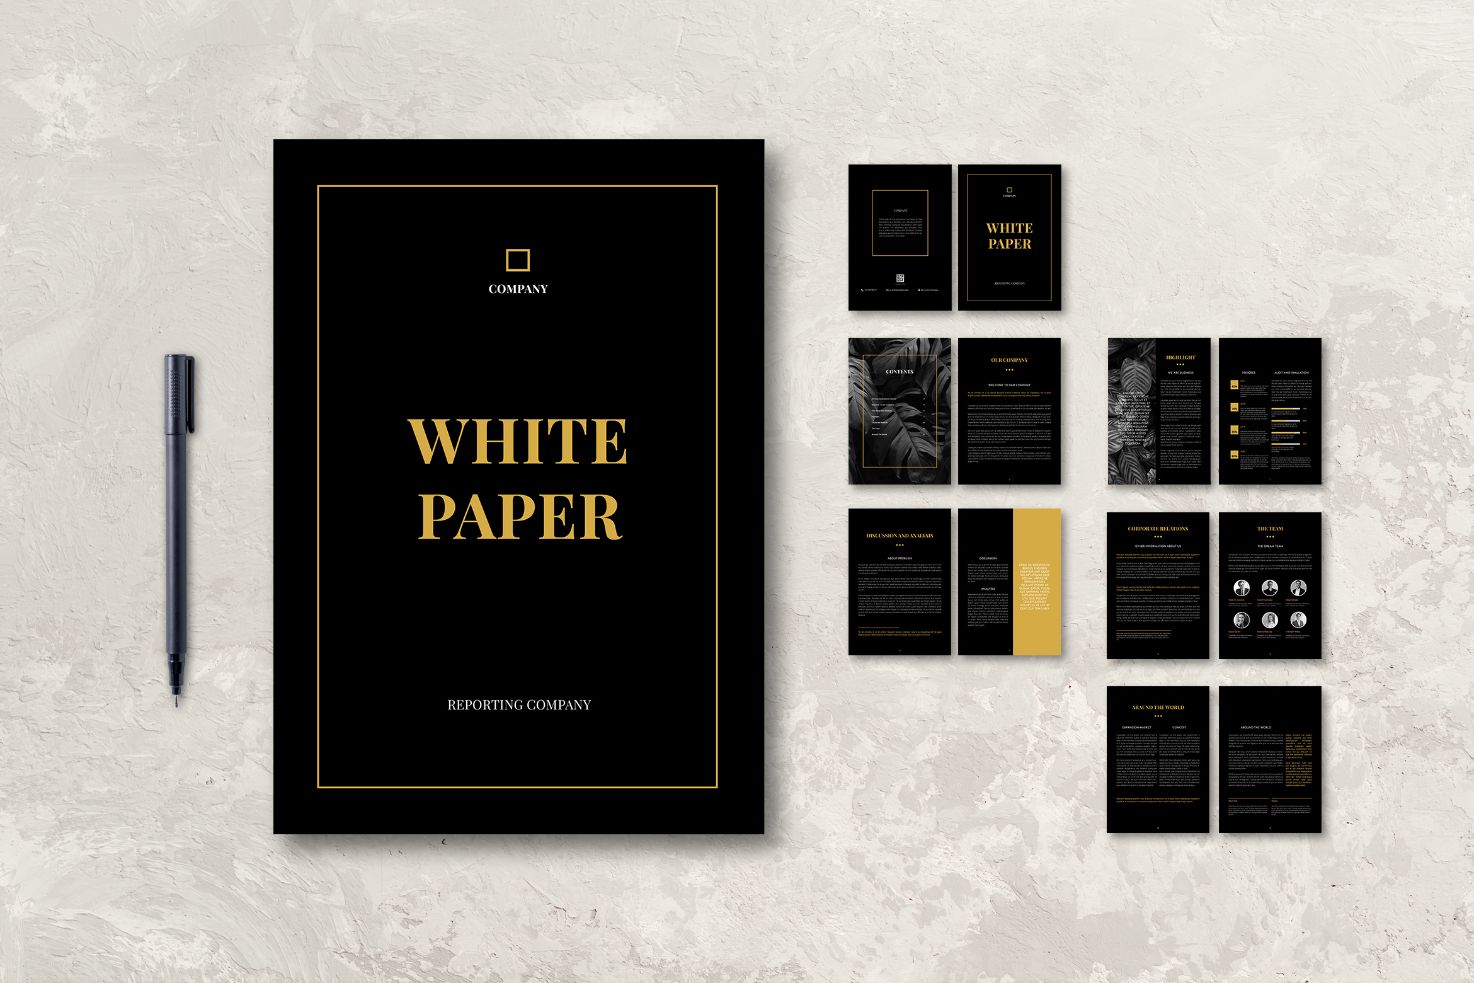 Whitepaper Company Profile - Black and Gold Theme